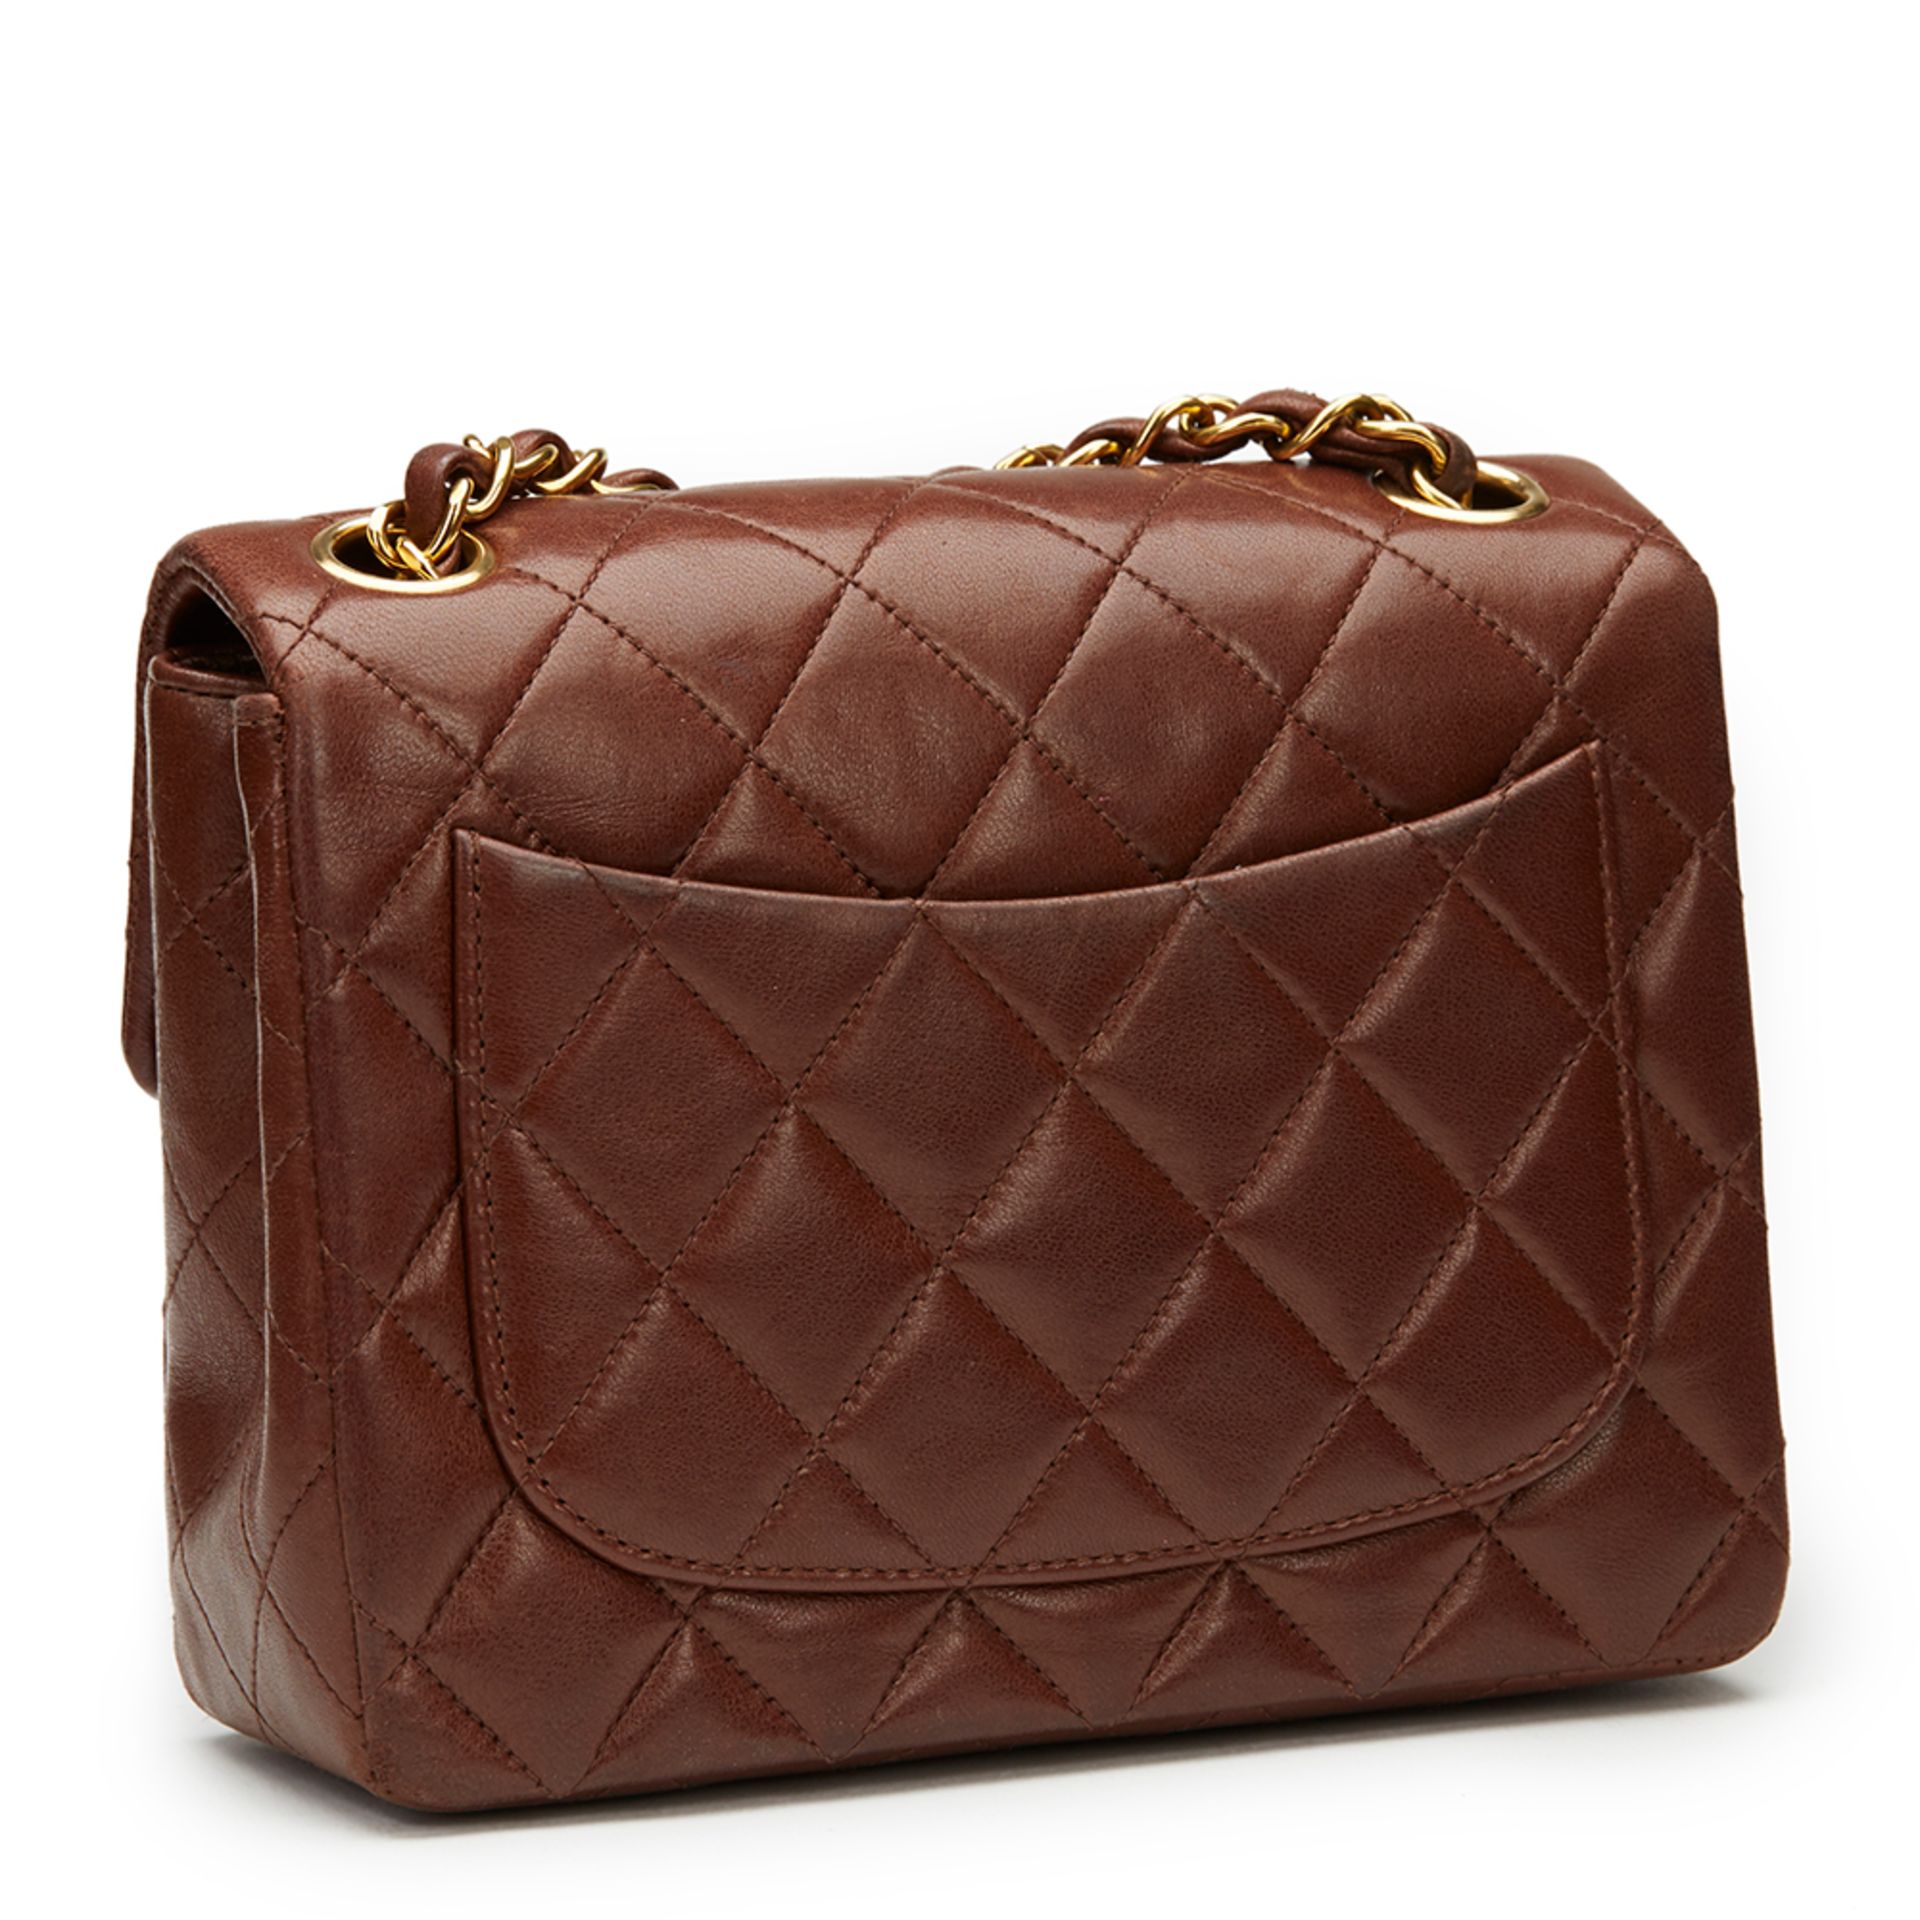 Chanel Mini Flap Bag - Image 4 of 11